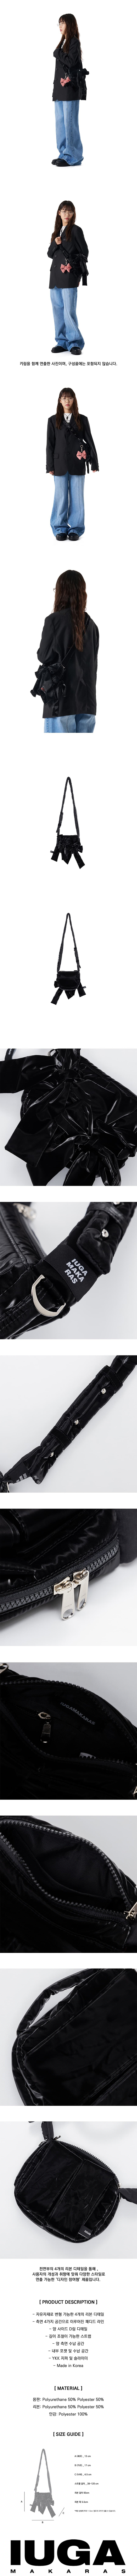 Knotted Micro Padding Bag (Glossy-Black)